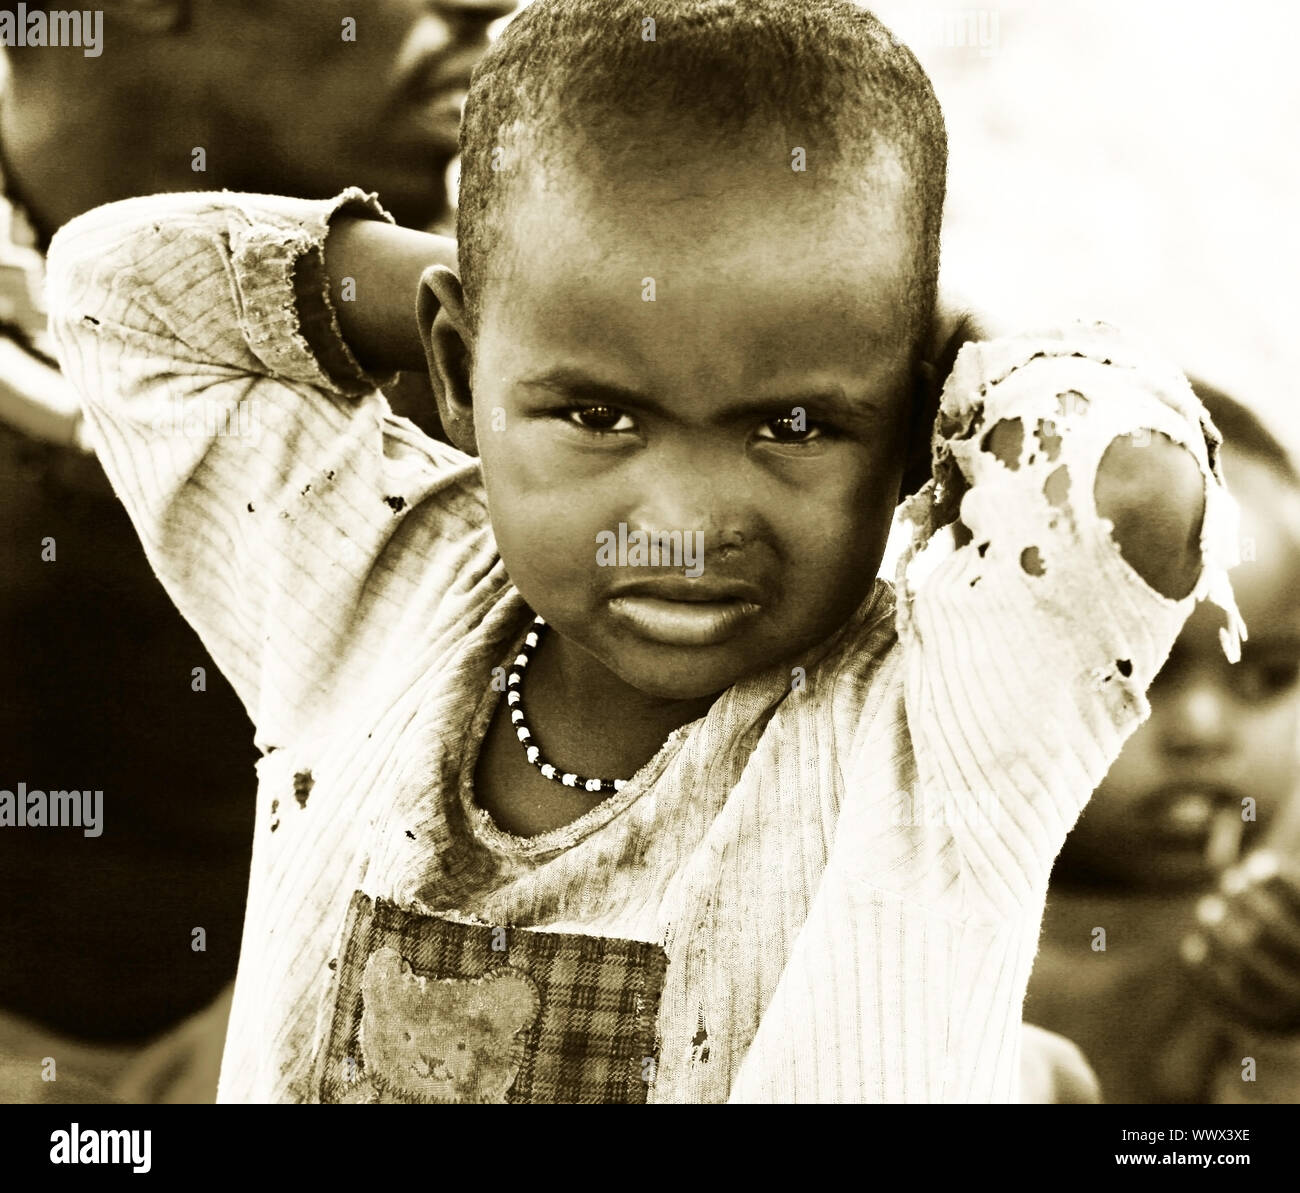 AFRICA,KENYA,SAMBURU,NOVEMBER 8:portrait of an African Kid of Samburu tribe village posing to camera,review of daily life of local people,near Samburu Stock Photo